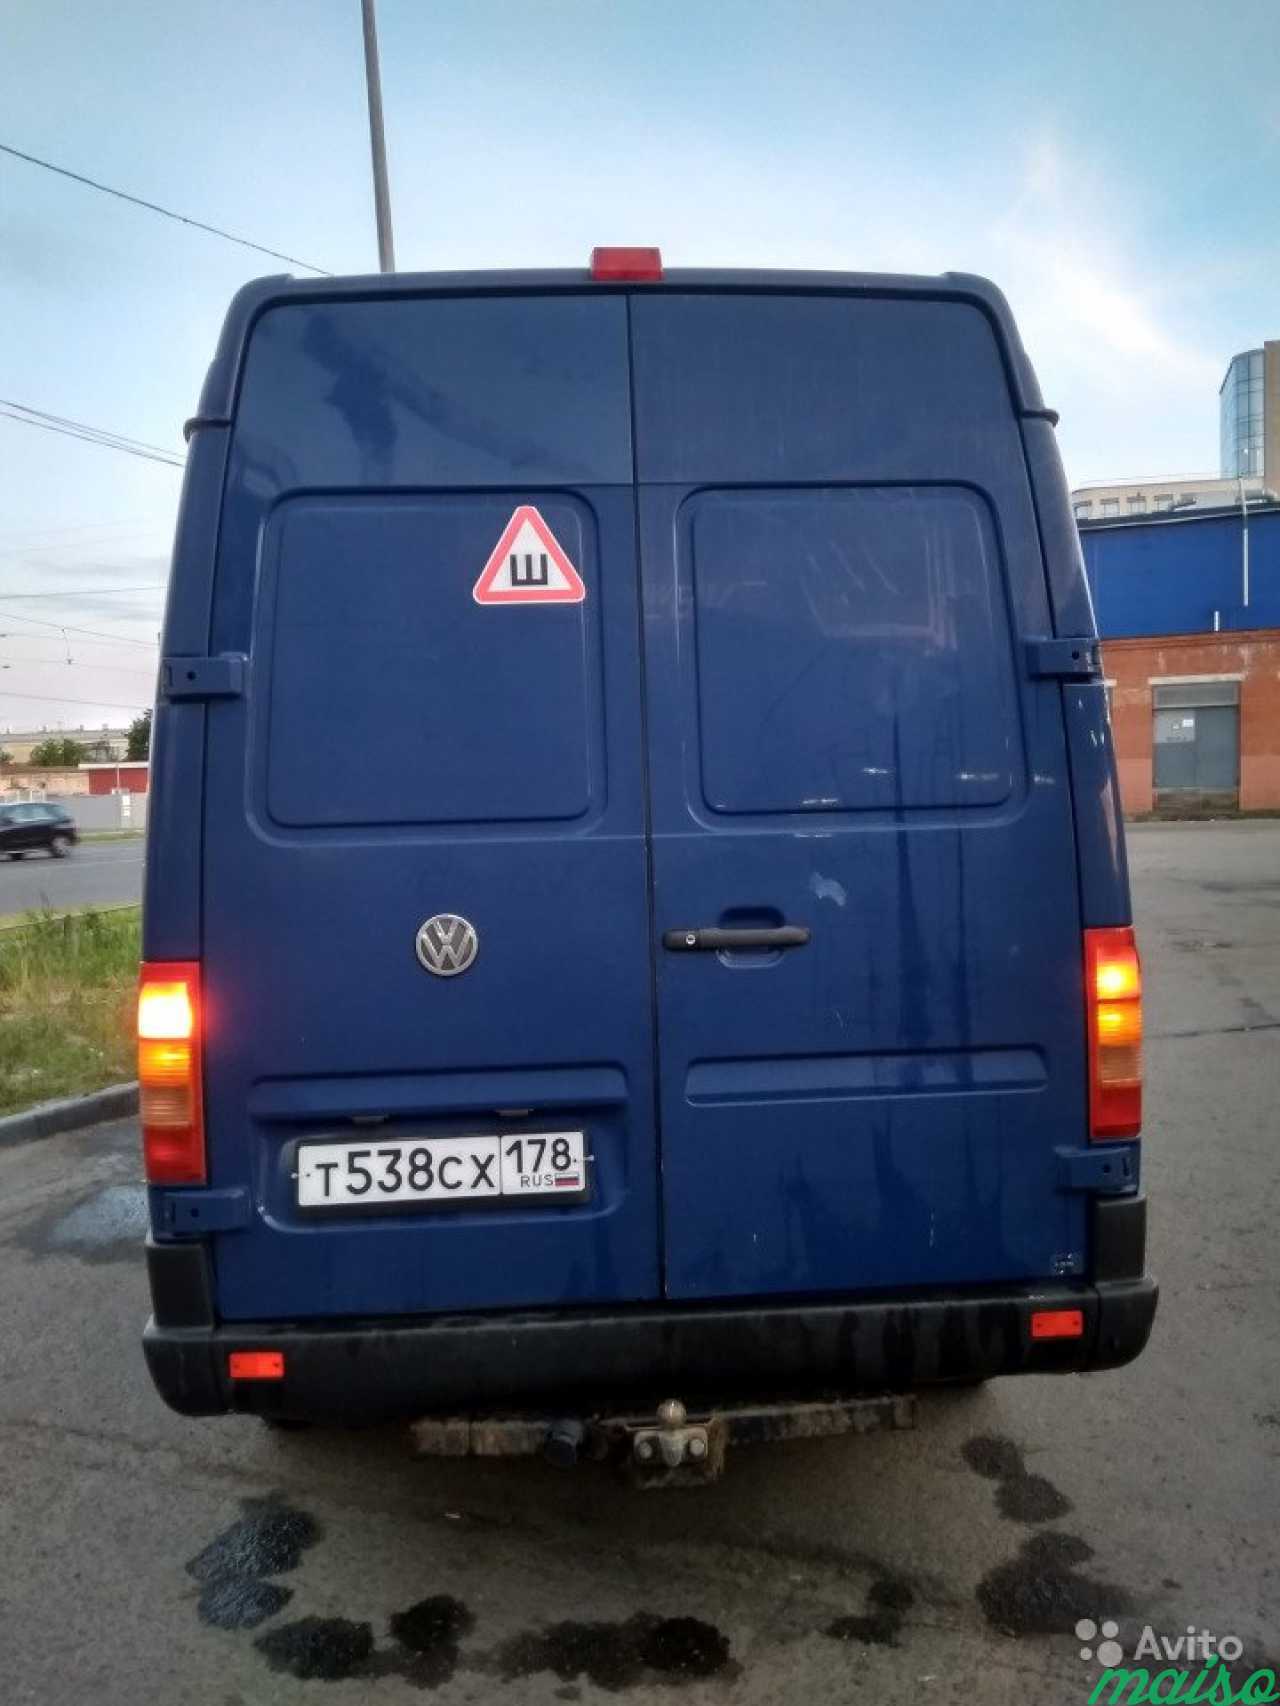 Аренда грузового фургона микроавтобуса Wolksvagen в Санкт-Петербурге. Фото 6